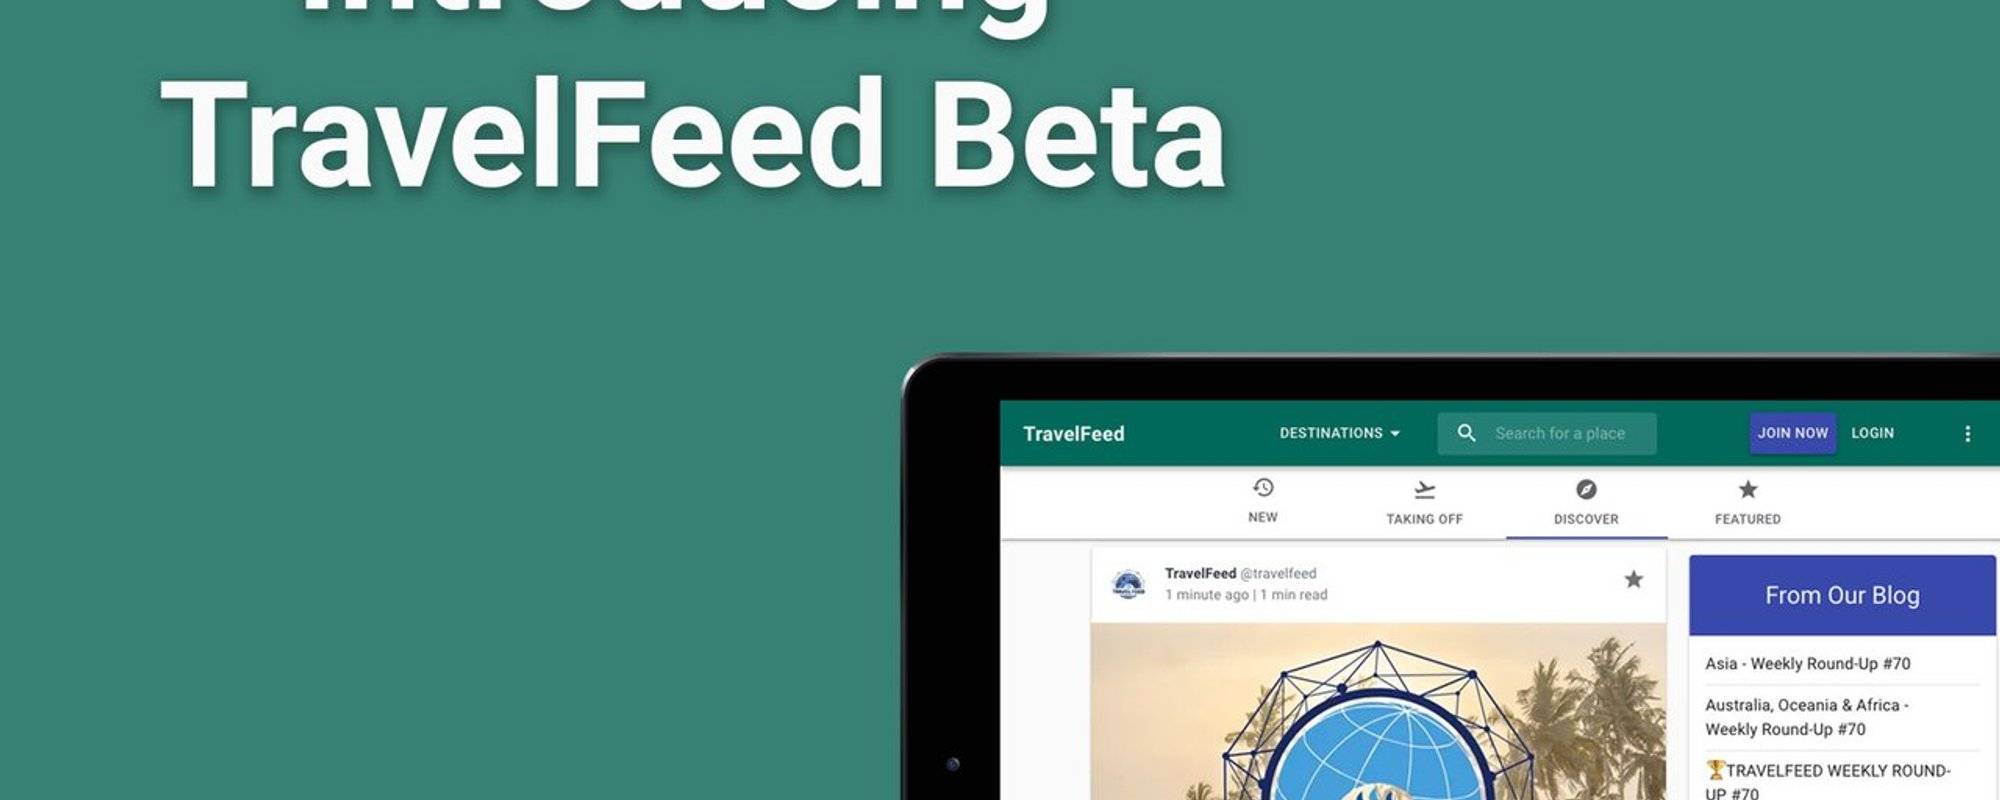 Introducing TravelFeed Beta